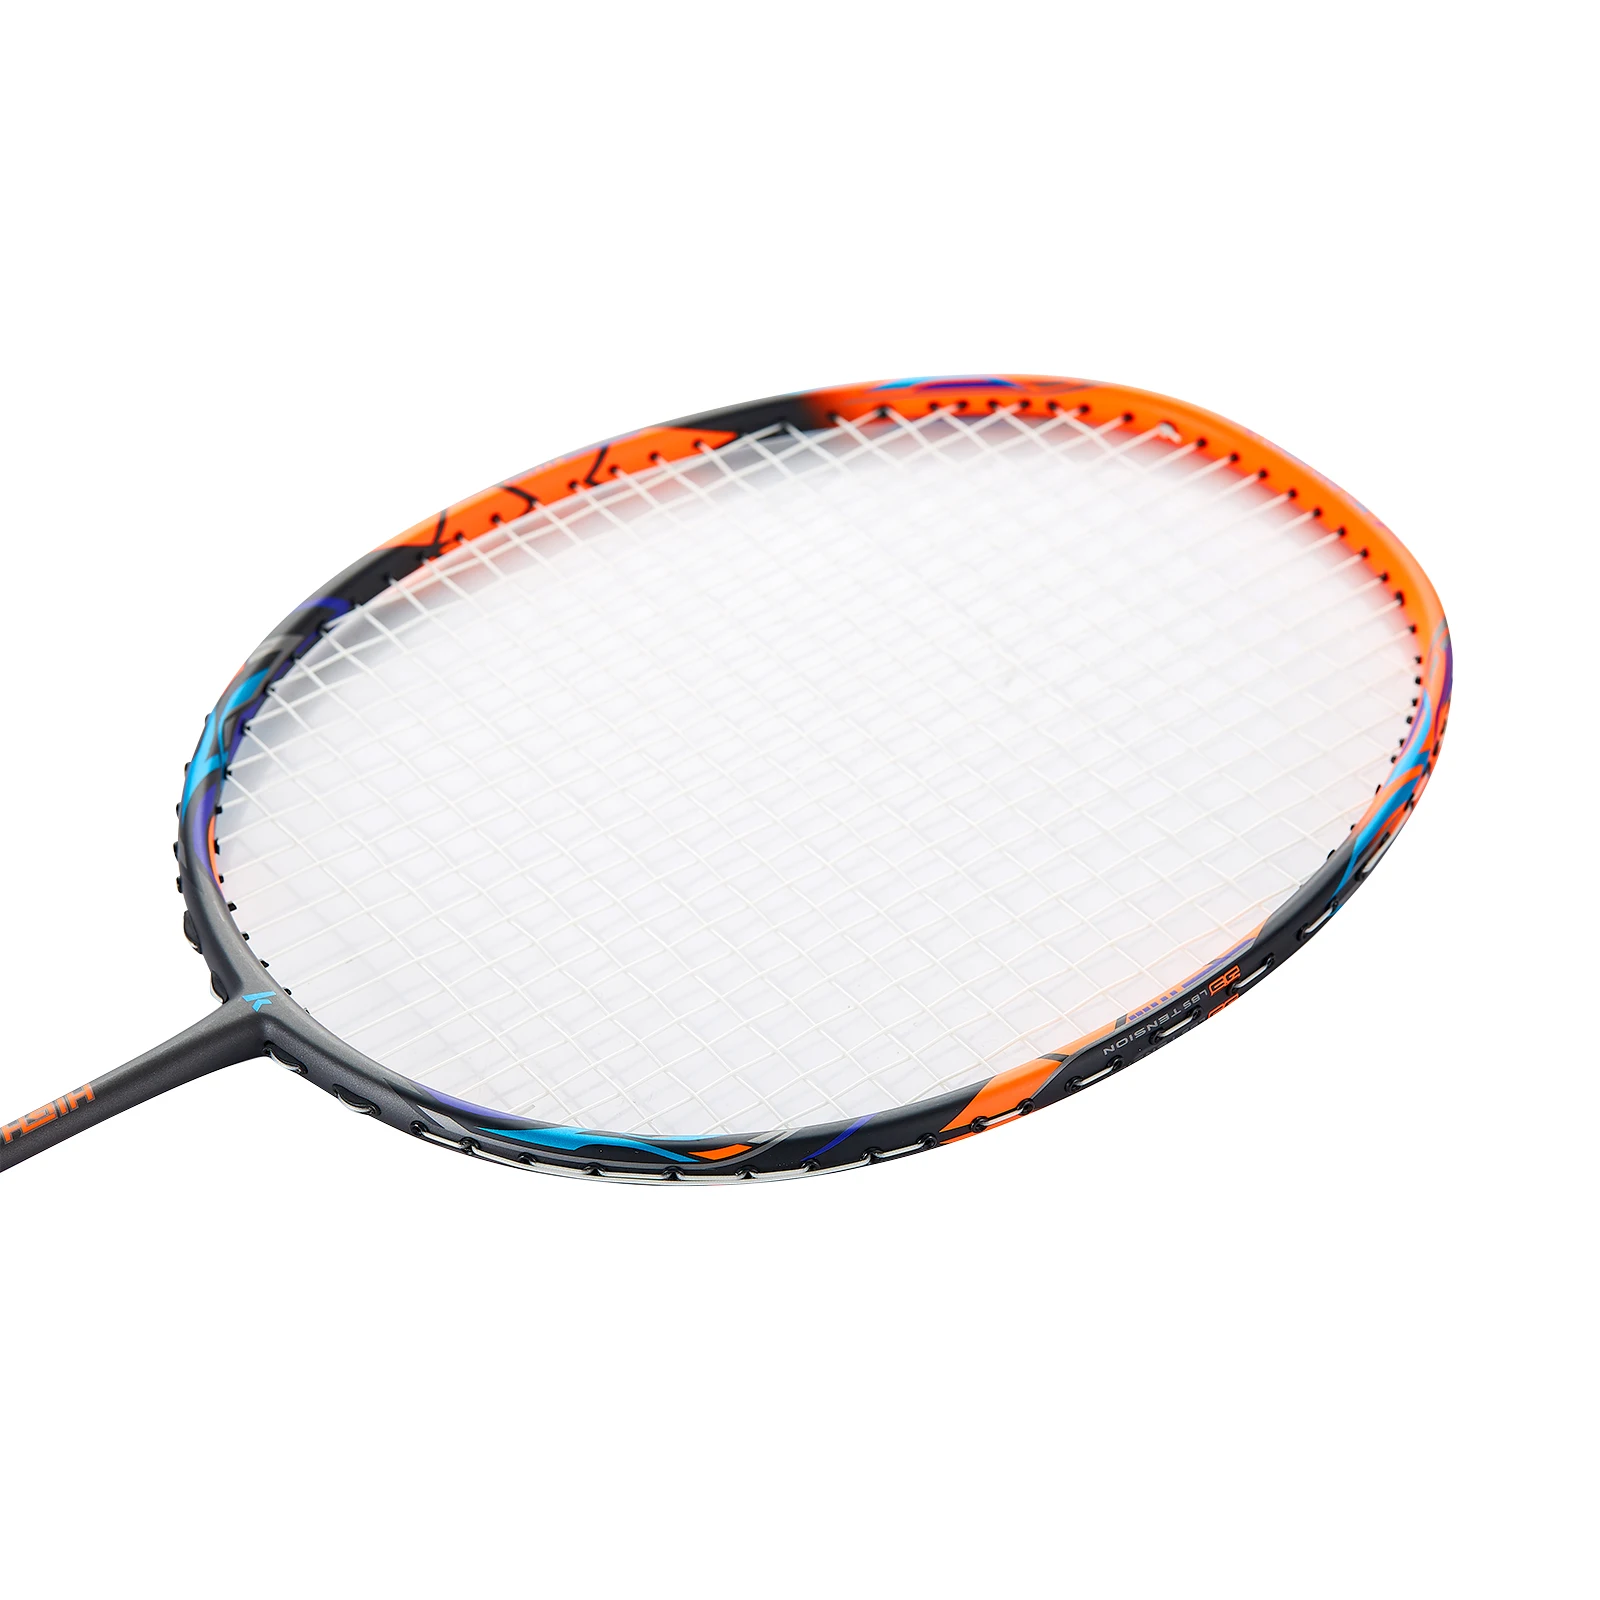 Source High tension 35LBS G30 Kawasaki Badminton Racket For Ultra Light 5U Full Carbon Offensive Professional Advanced on m.alibaba